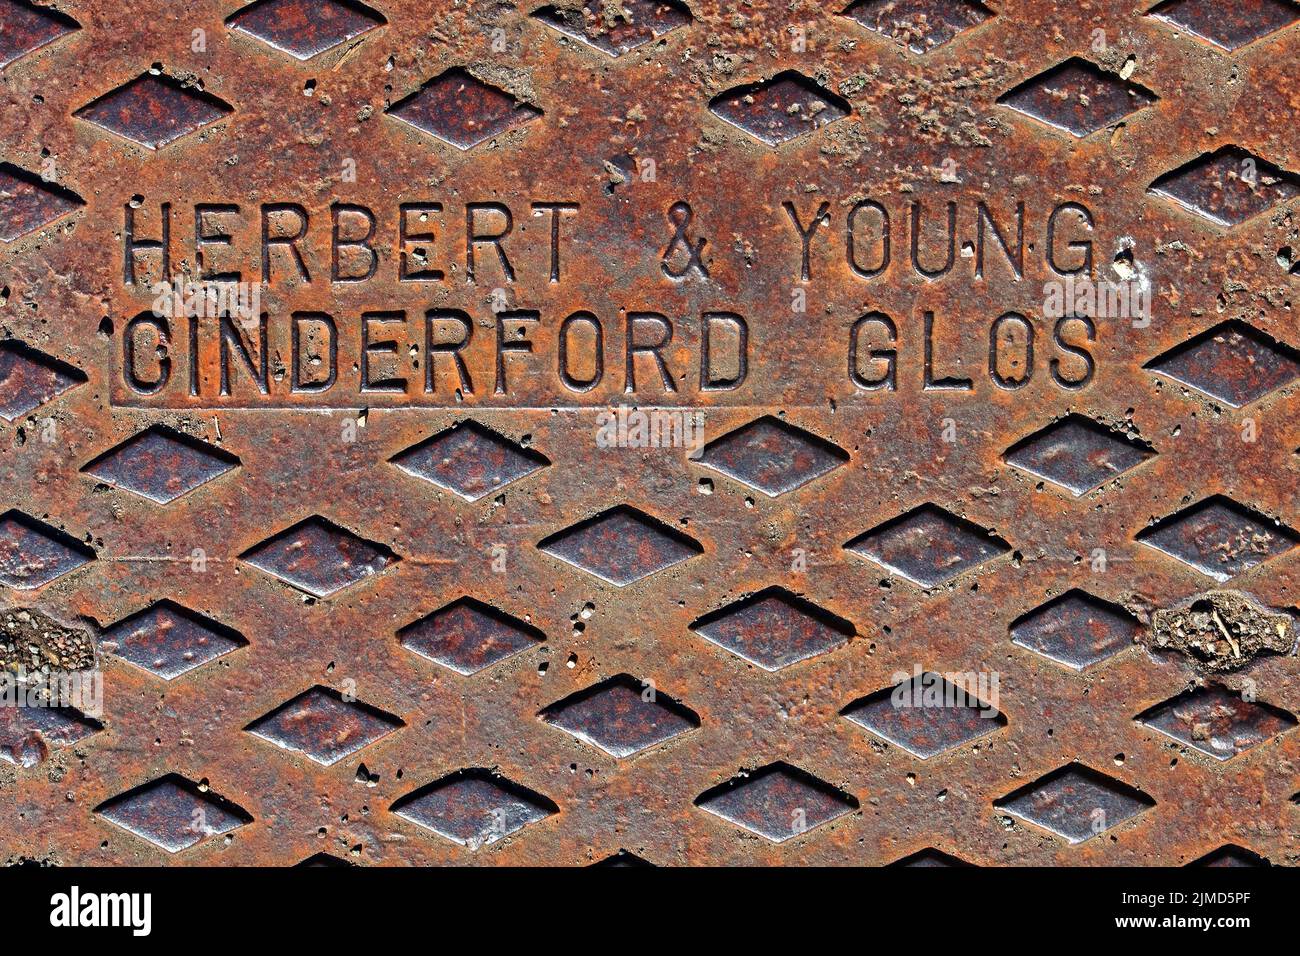 Herbert and Young Cinderford Glos Grid, Stroud, Gloucestershire, England, Vereinigtes Königreich, GL5 Stockfoto